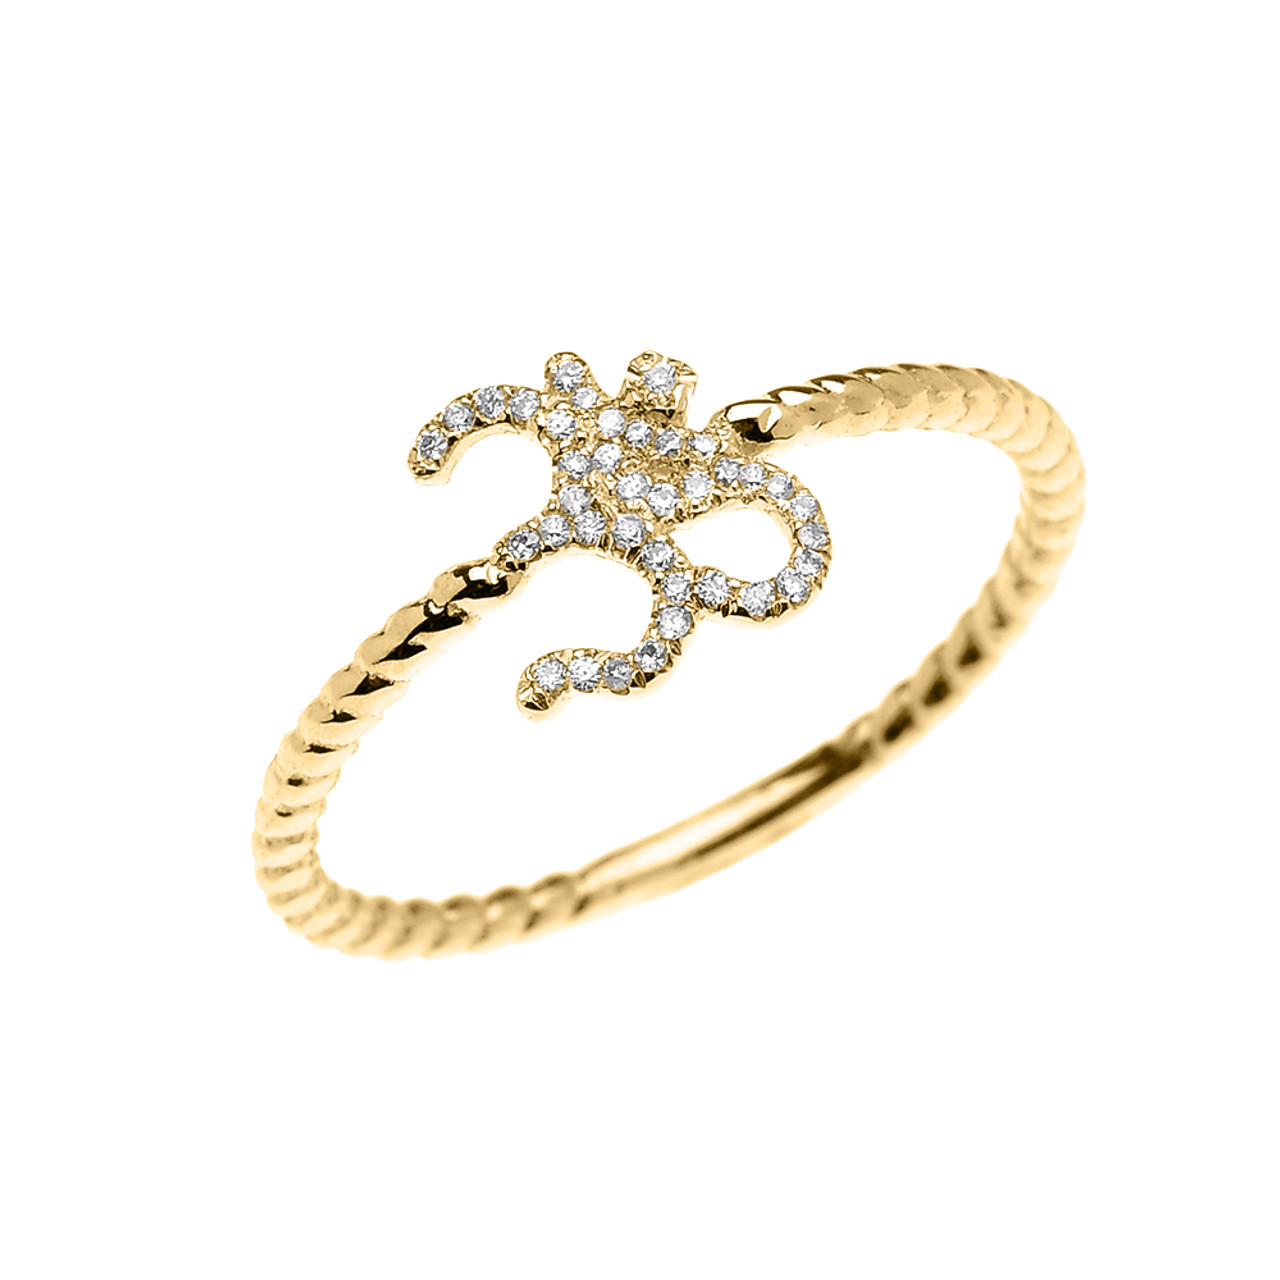 Buy quality Auspicious Om Design 22kt Gold Ring in Pune